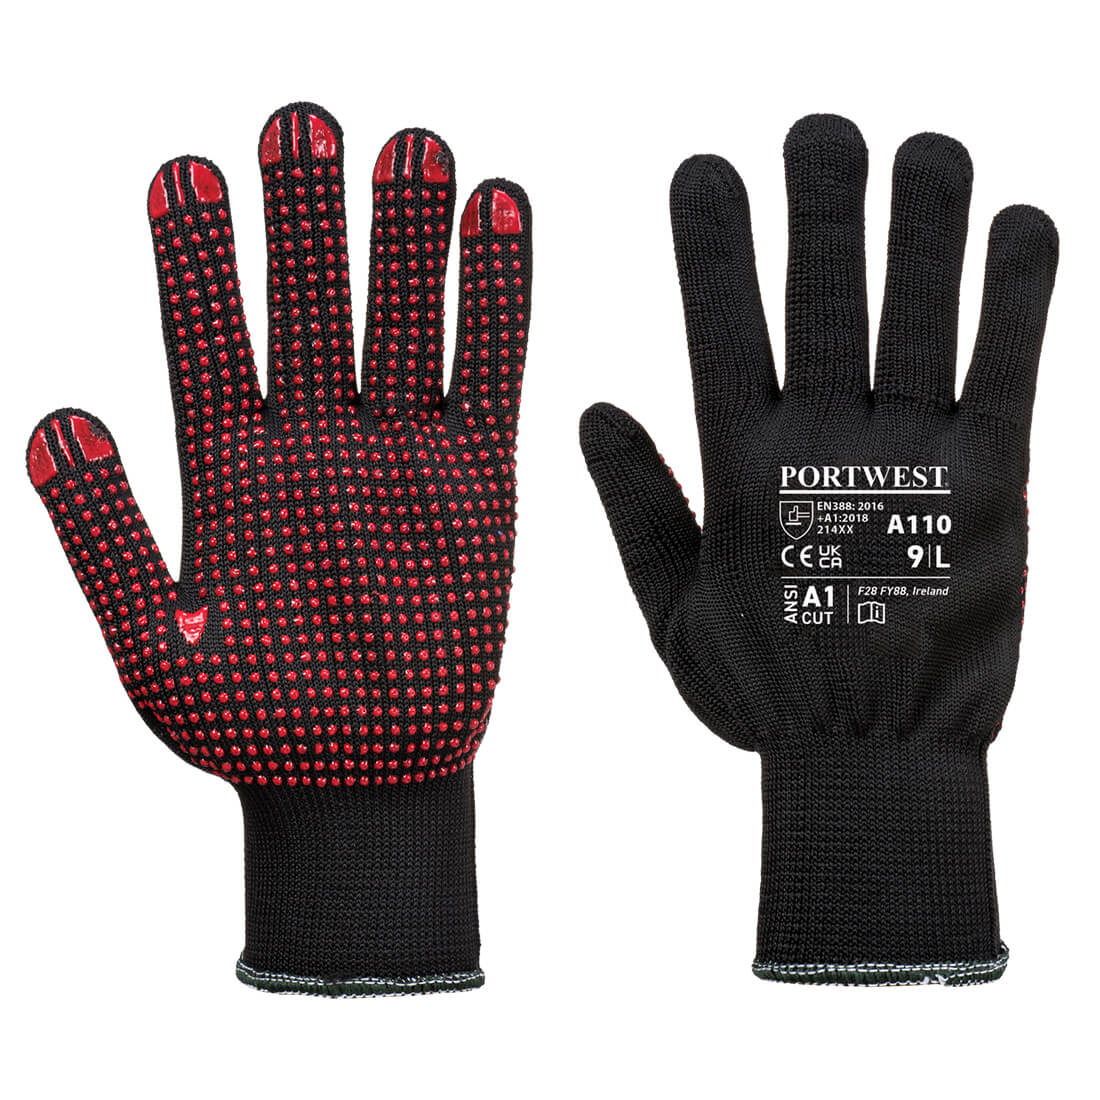 Polka Dot Gloves, Black - Large